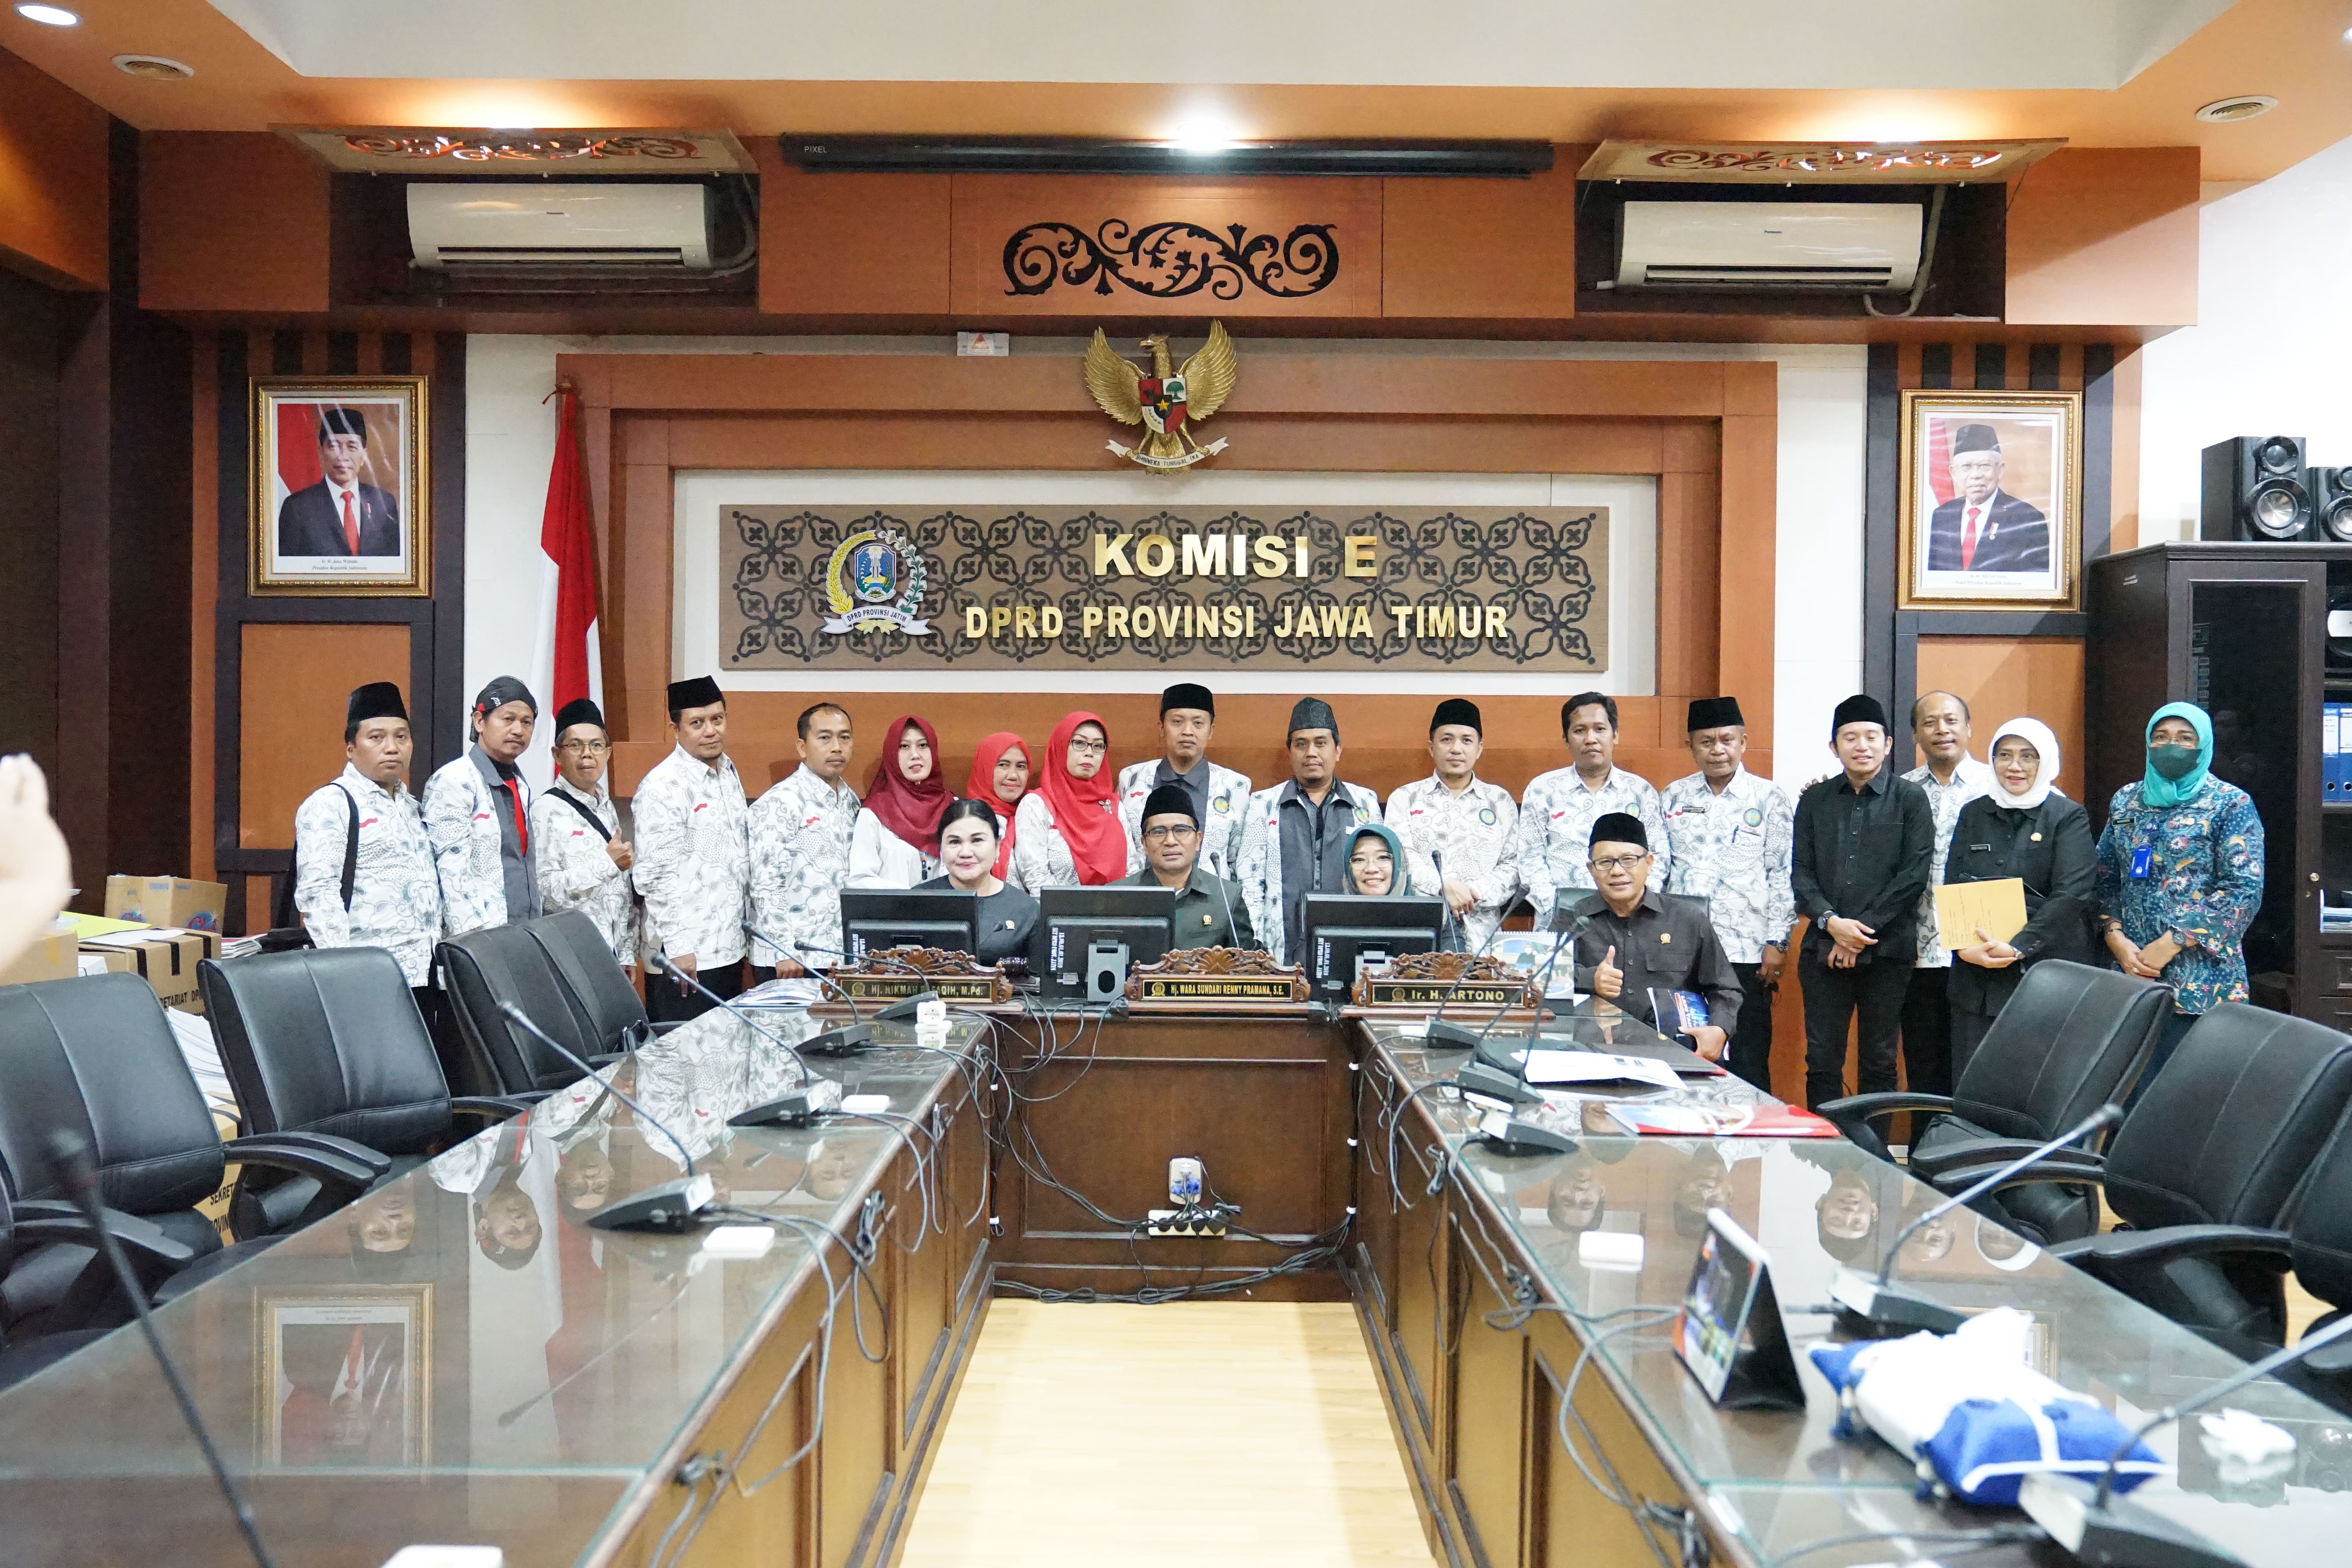 Anggota Komisi E DPRD Jawa Timur Adam Rusydi siap menyalurkan aspirasi Persatuan Guru Swasta Indonesia (PGSI) Jawa Timur